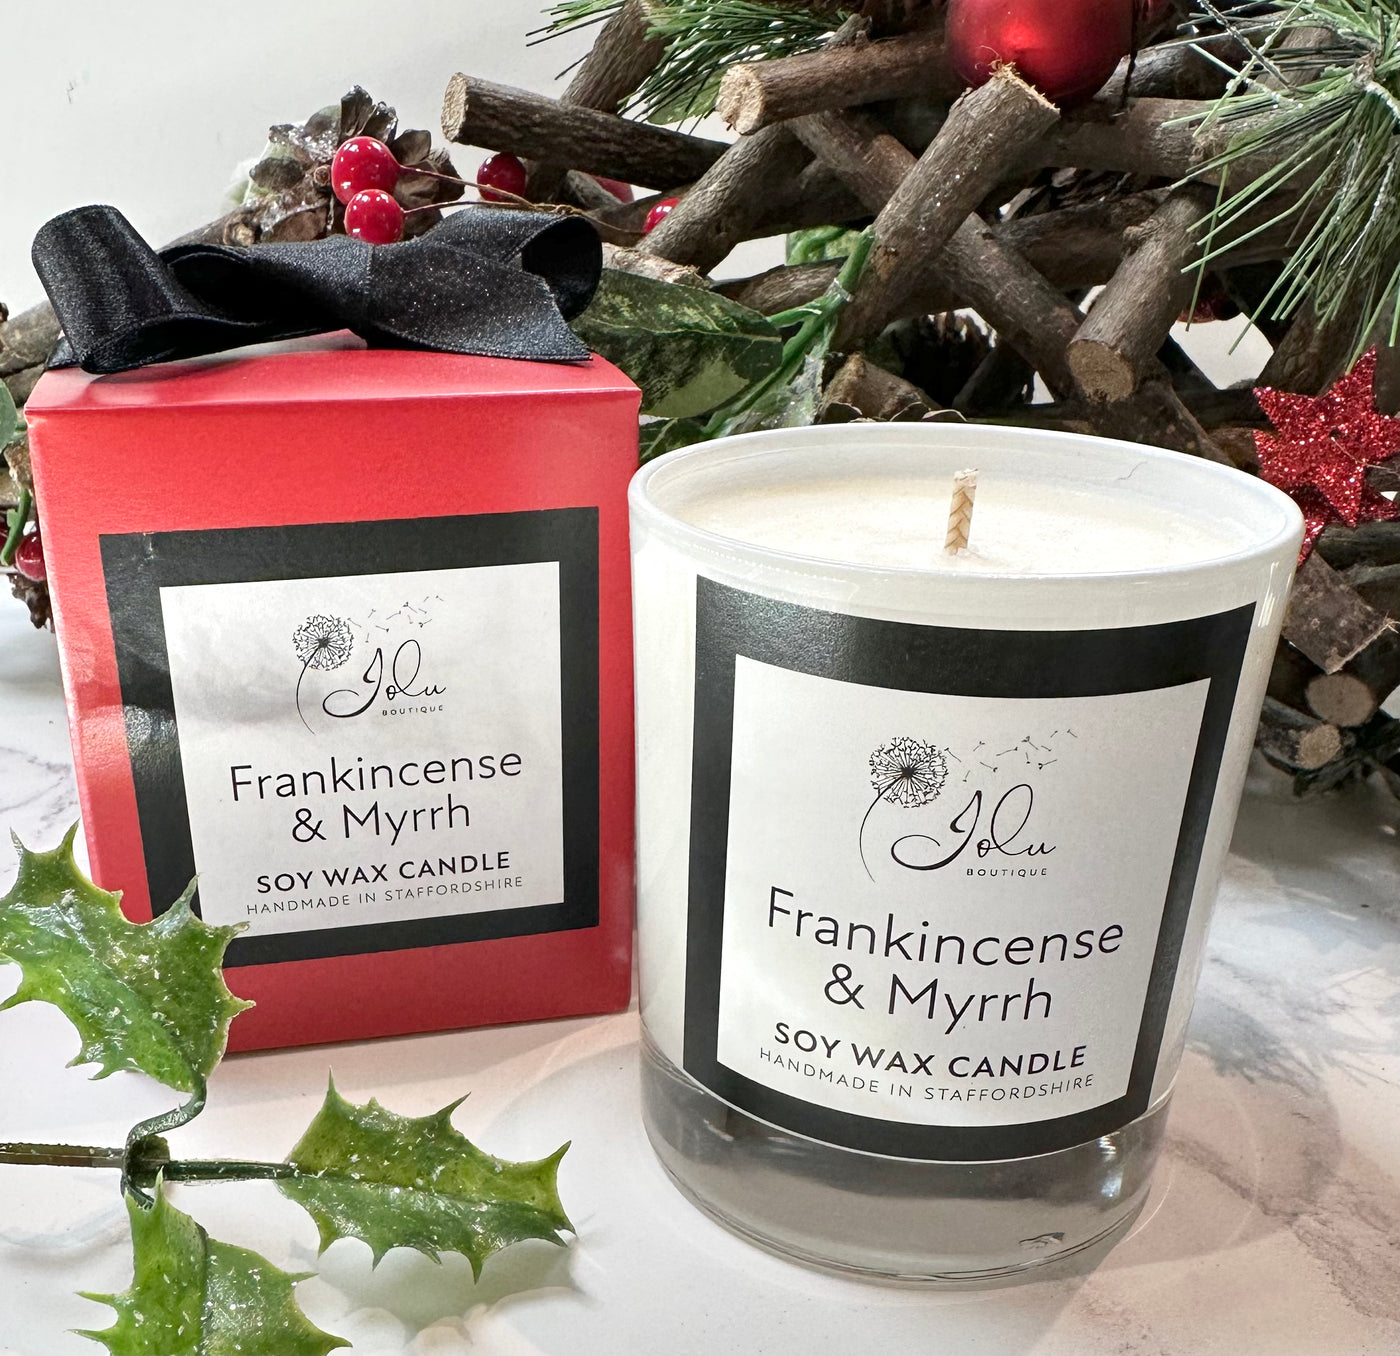 Jolu Boutique Frankincense & Myrrh Soy Wax Candle